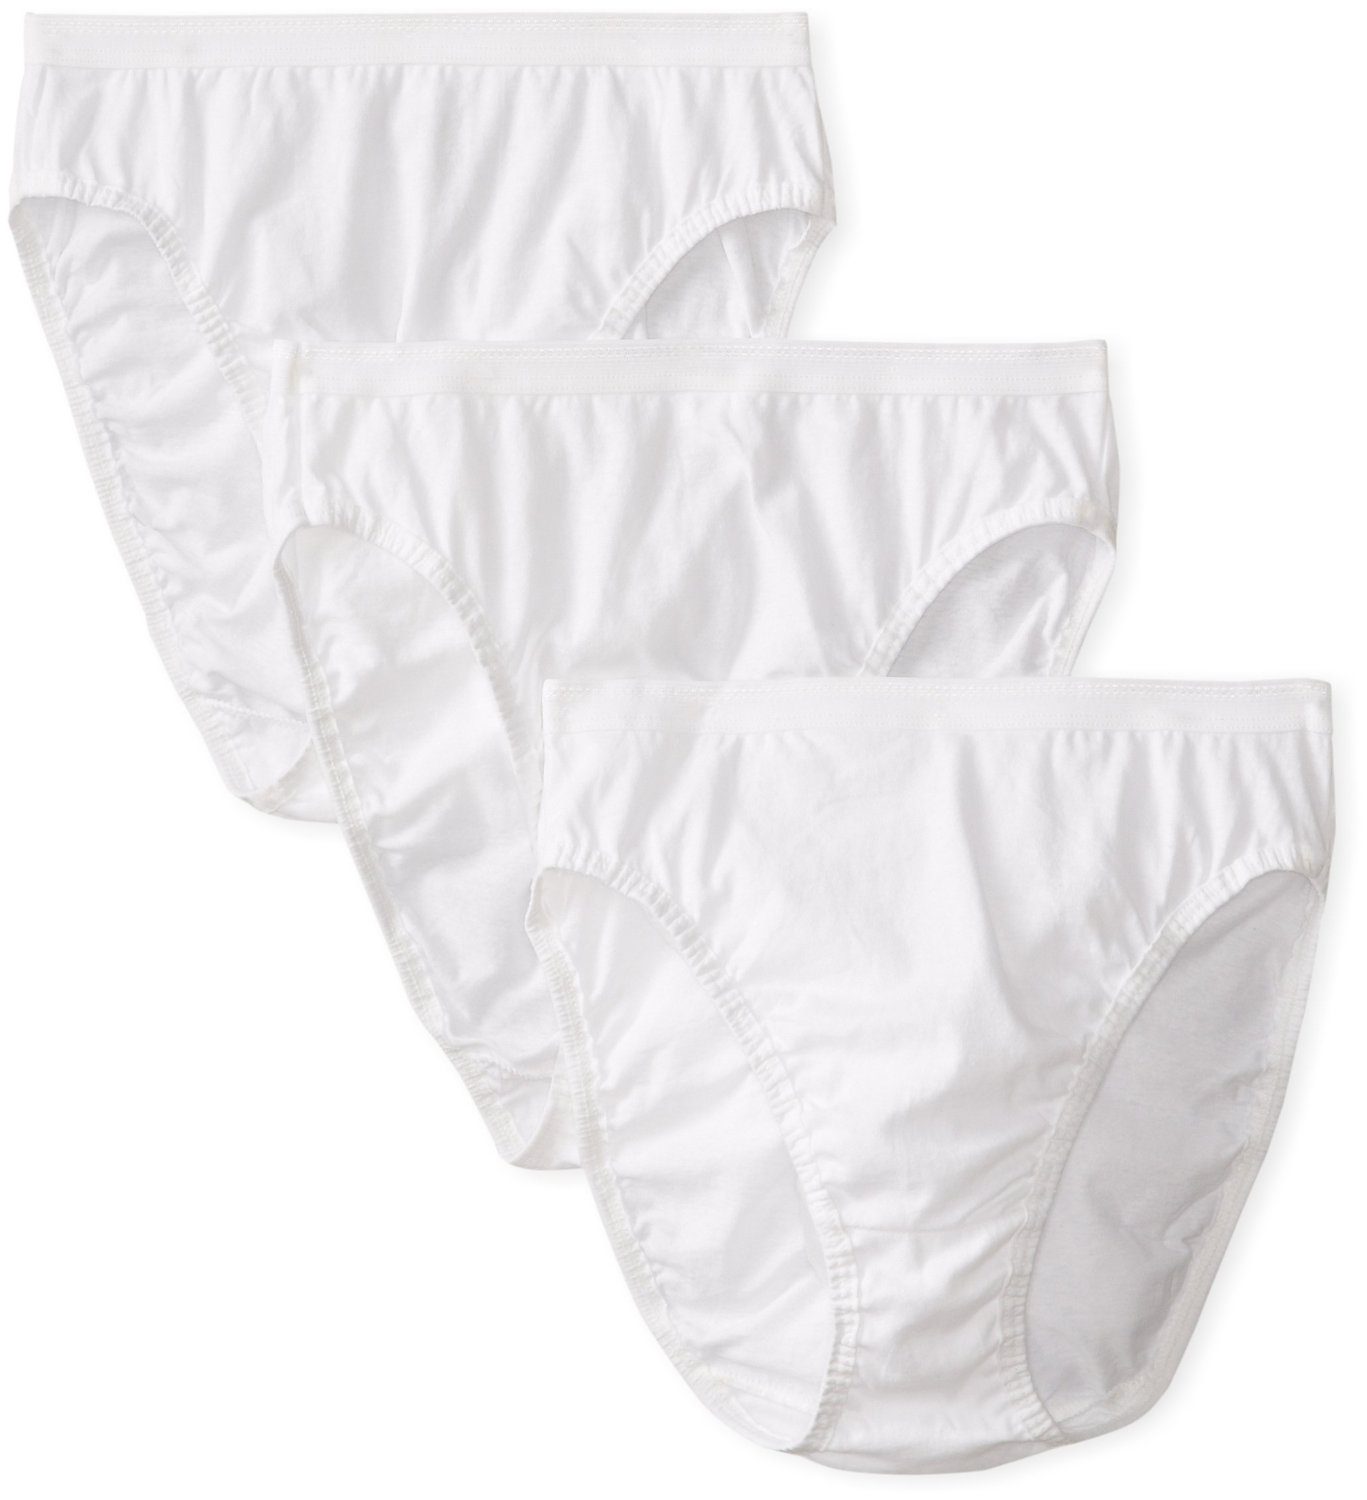 Women's Cotton Hi Cut Panty, White 3 Pack